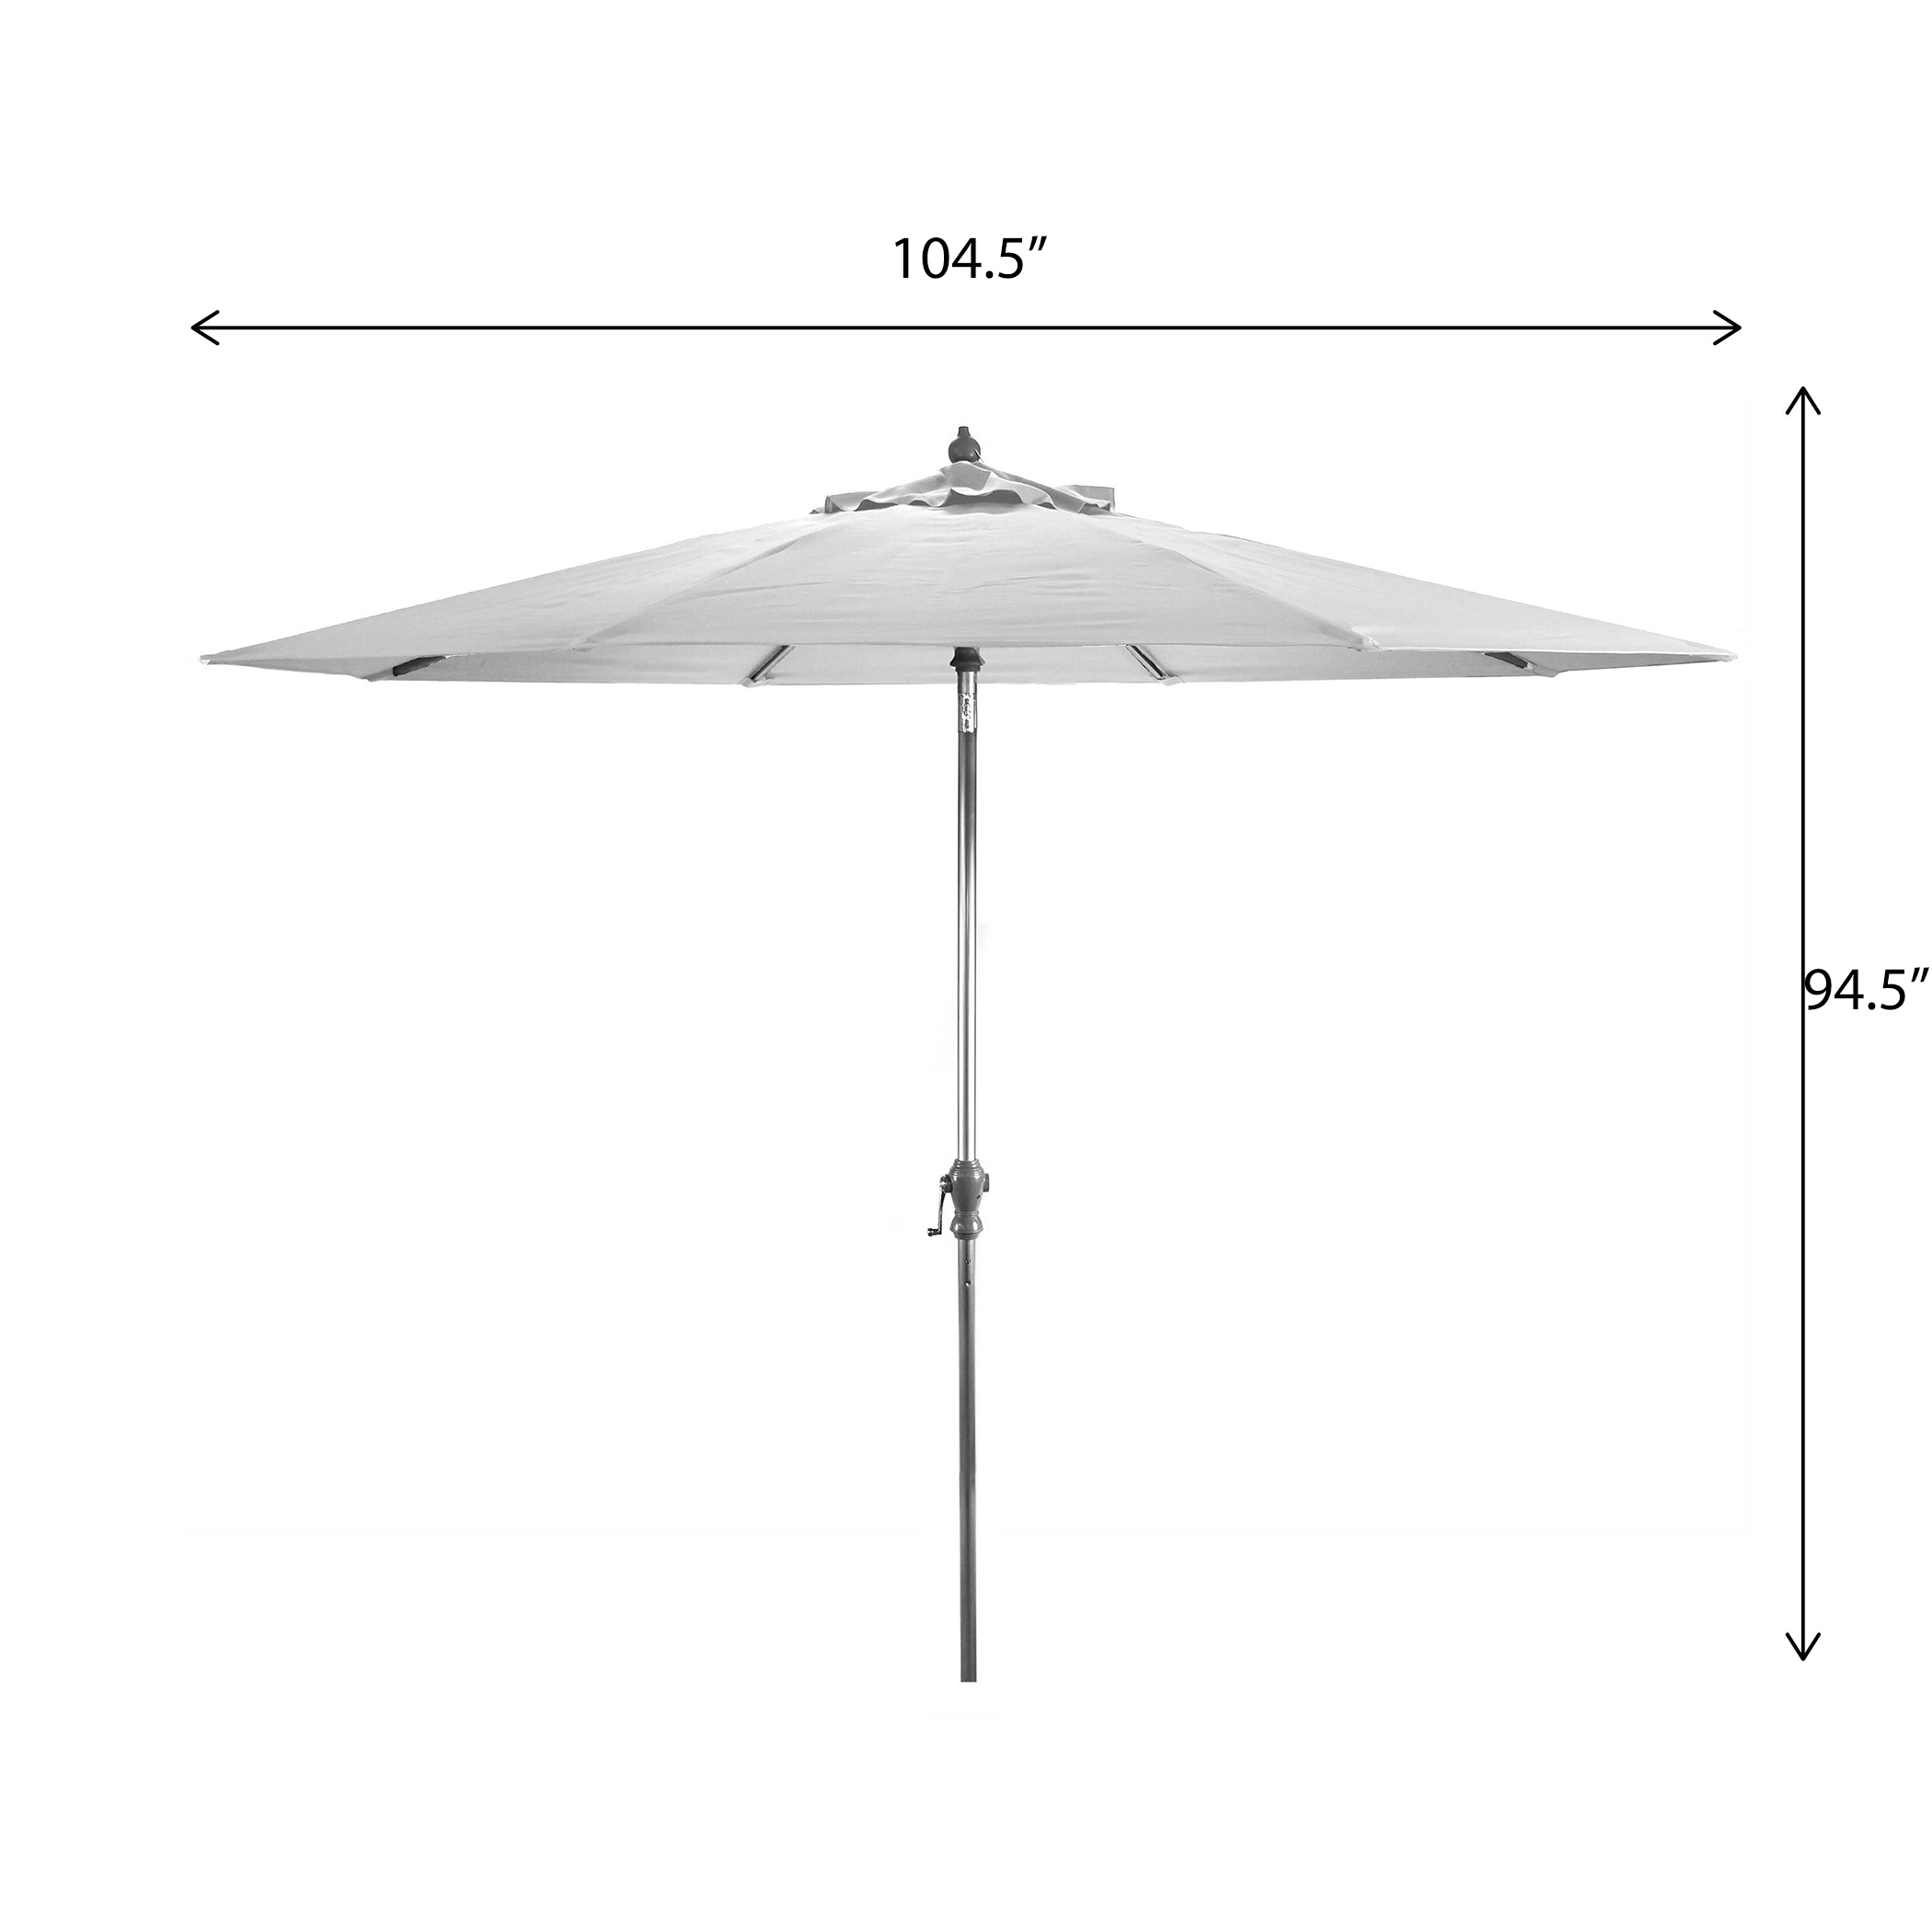 Jordan Manufacturing 8' Navy Solid Octagon Folding Patio Umbrella with Push-Button Tilt and Crank Opening - image 3 of 7